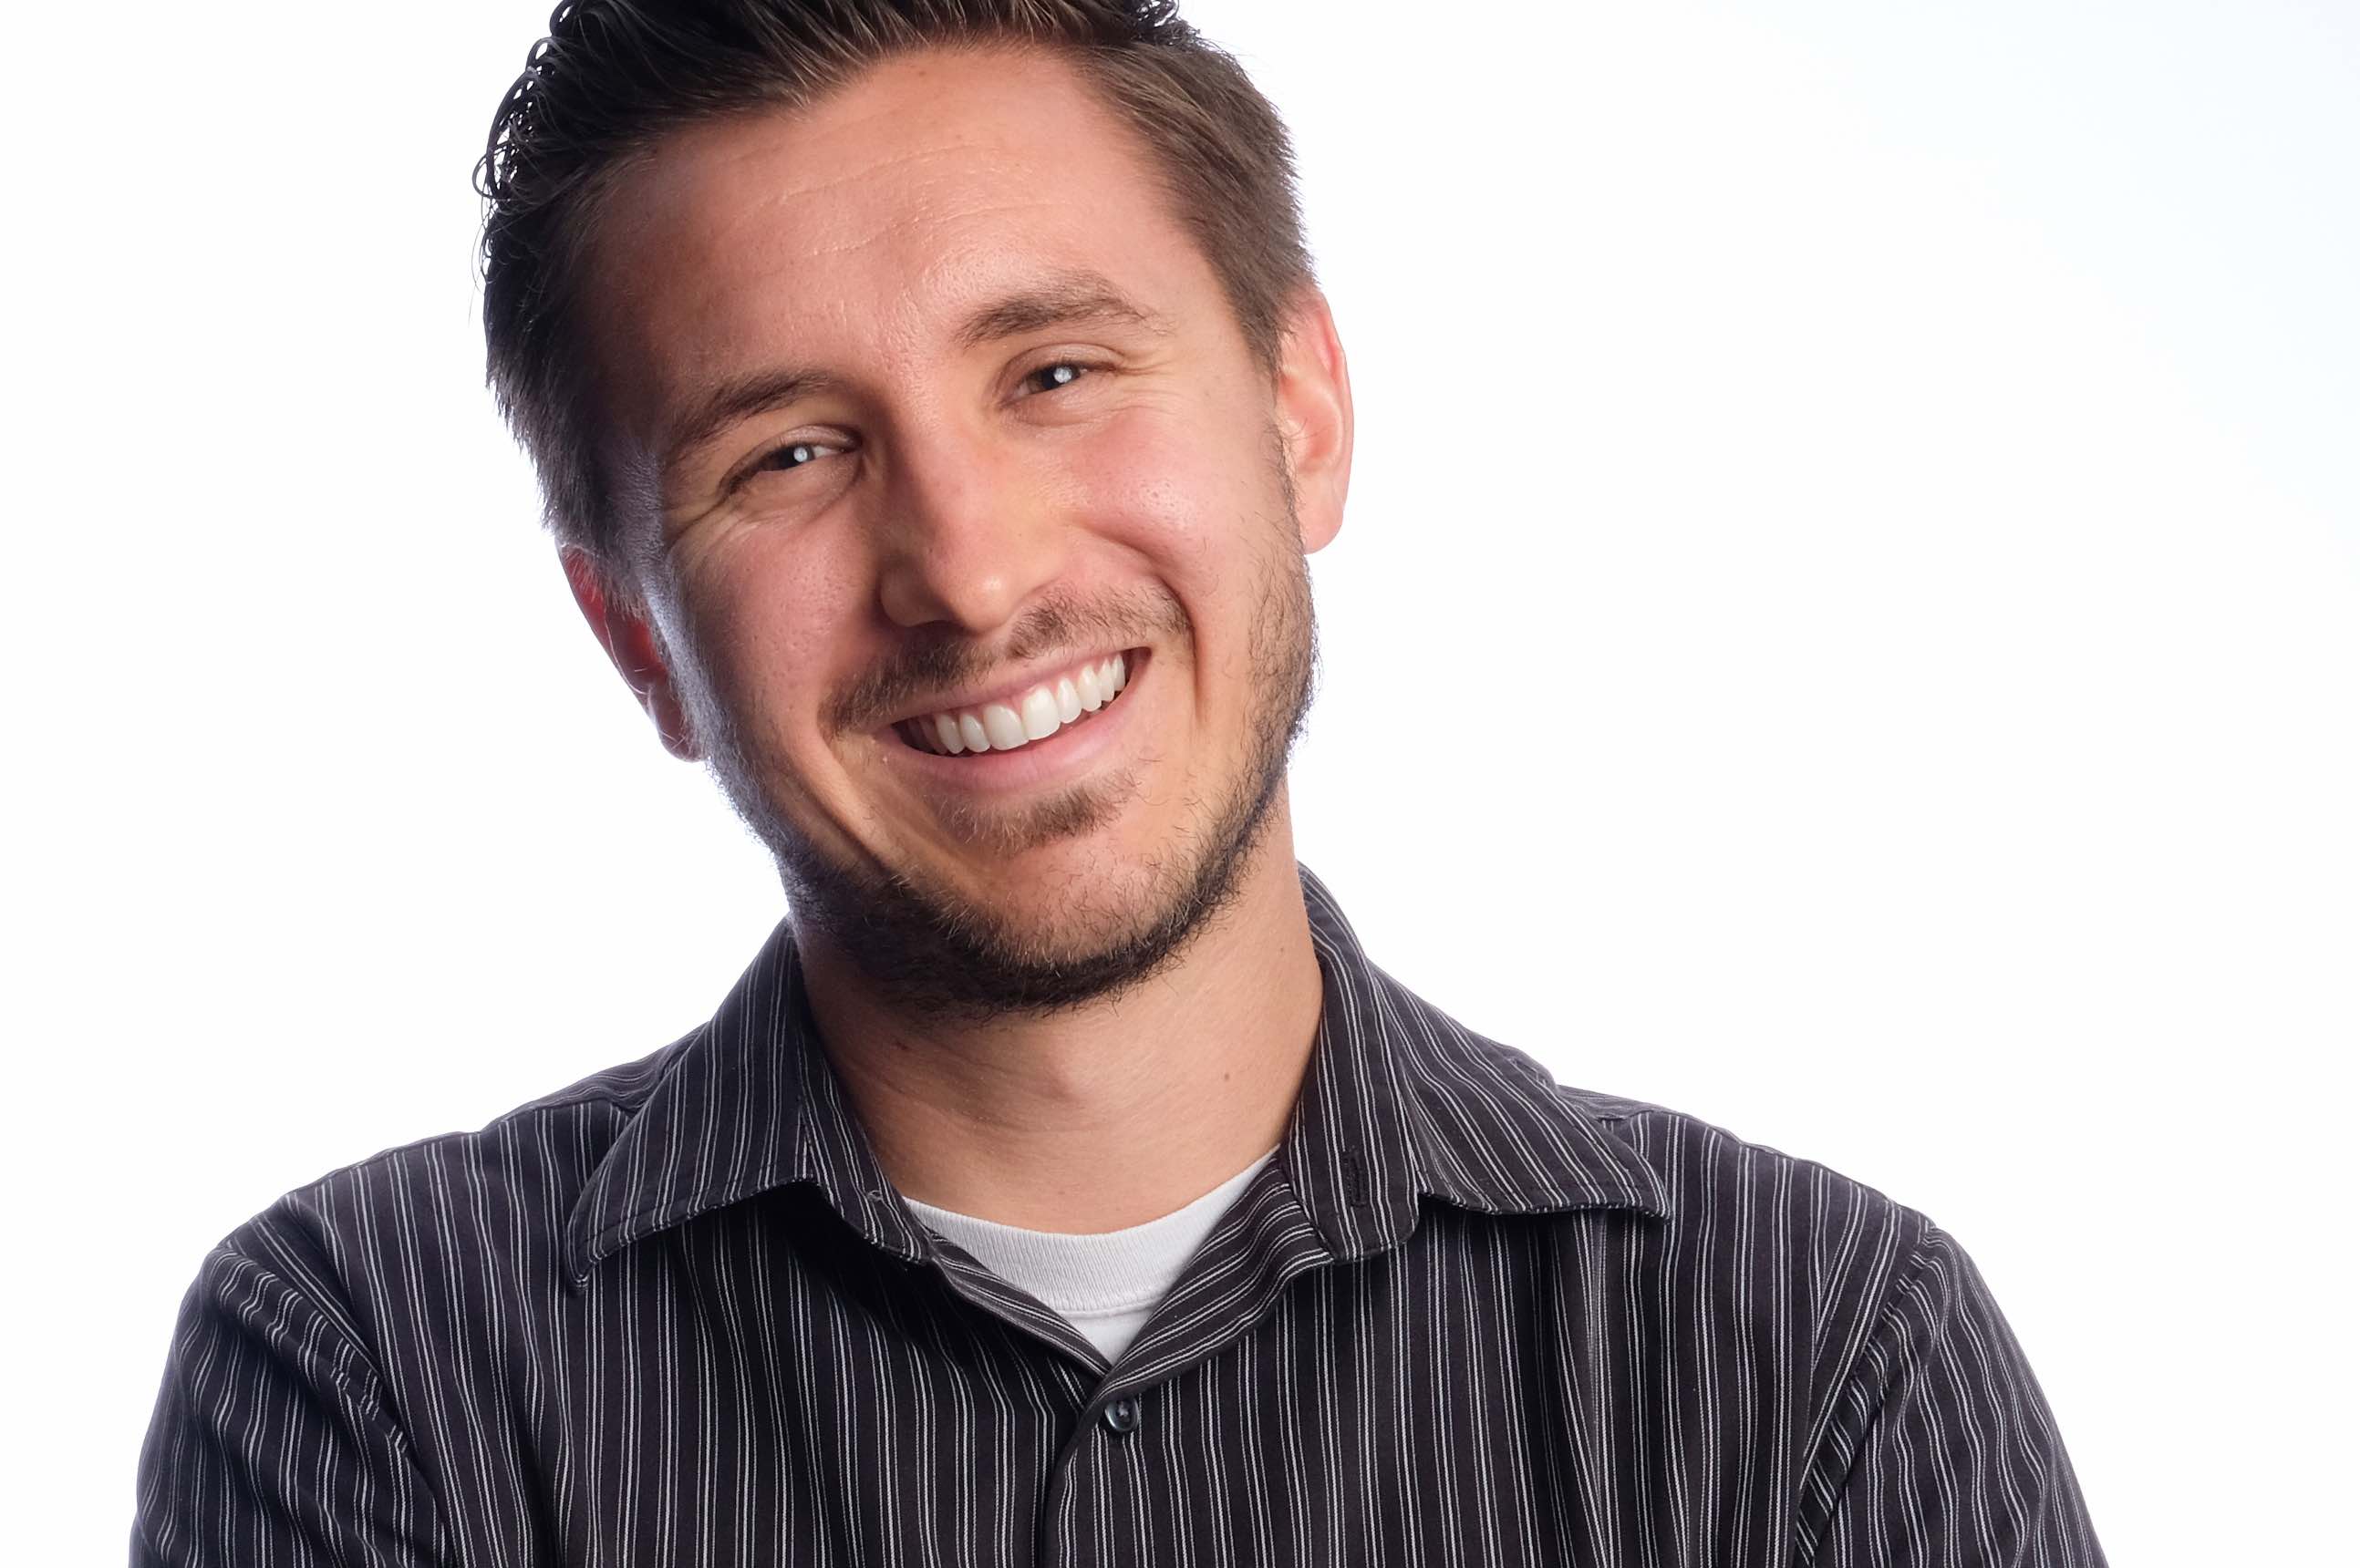 Matt Gush portrait smiling against a white background